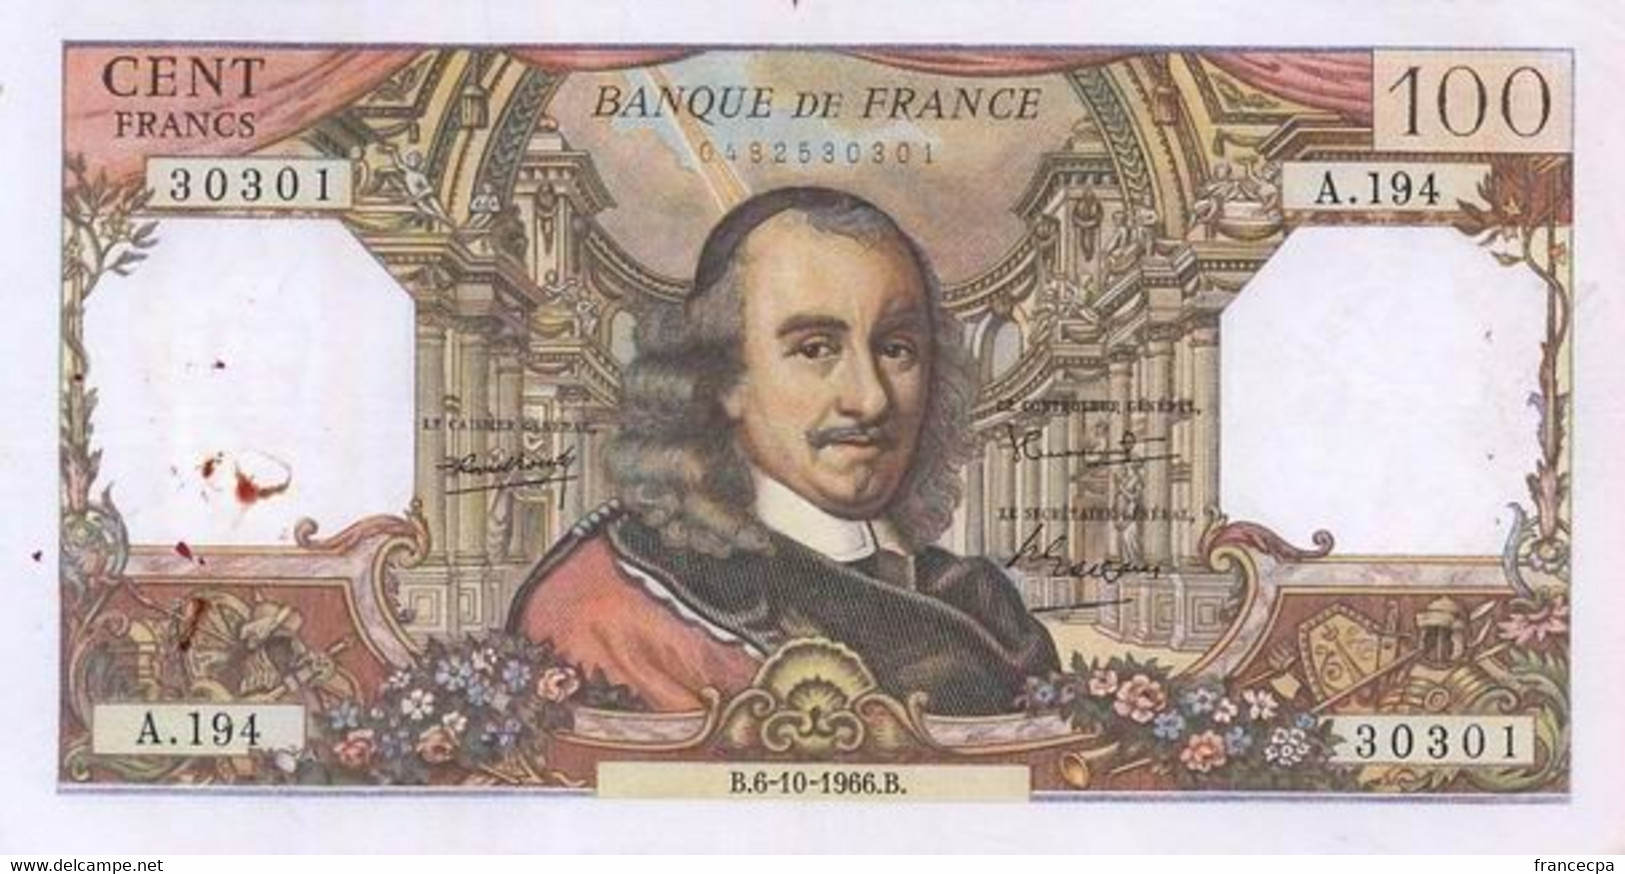 004 BILLET FRANCE 100 Francs Corneille B.6-10-1966.B. N°0482530301 - 100 F 1964-1979 ''Corneille''